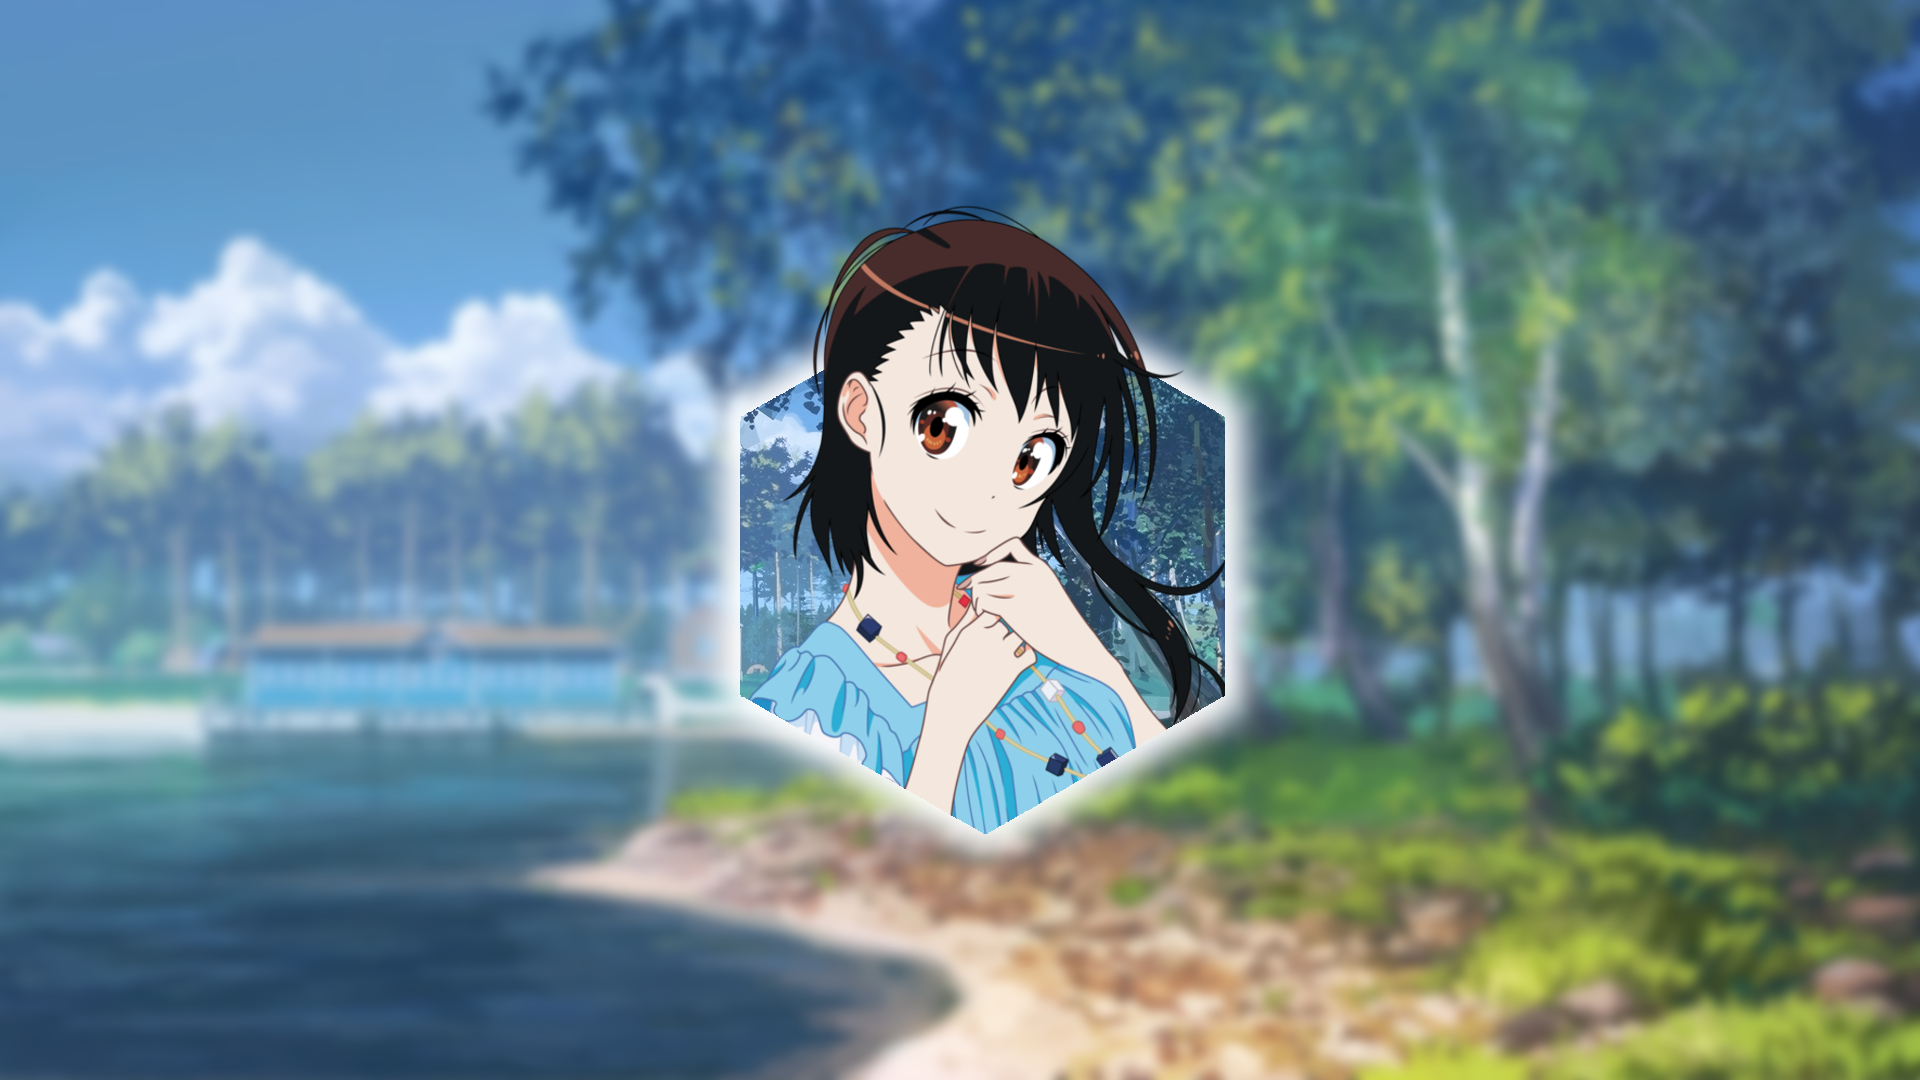 1mib, 1920x1080, Onodera - Anime Backgrounds Summer , HD Wallpaper & Backgrounds